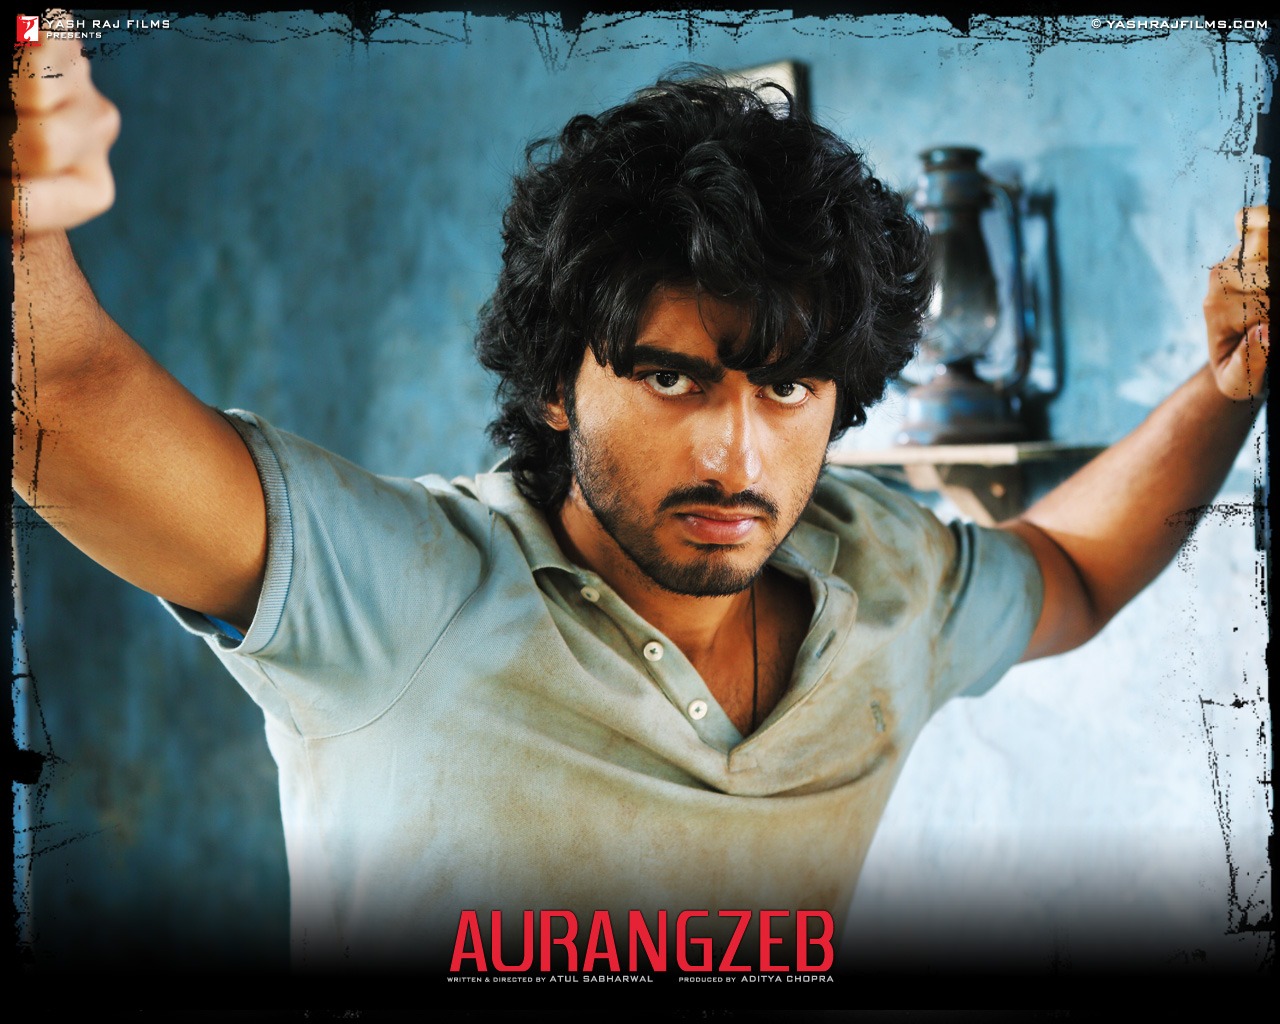 Aurangzeb Movie Review